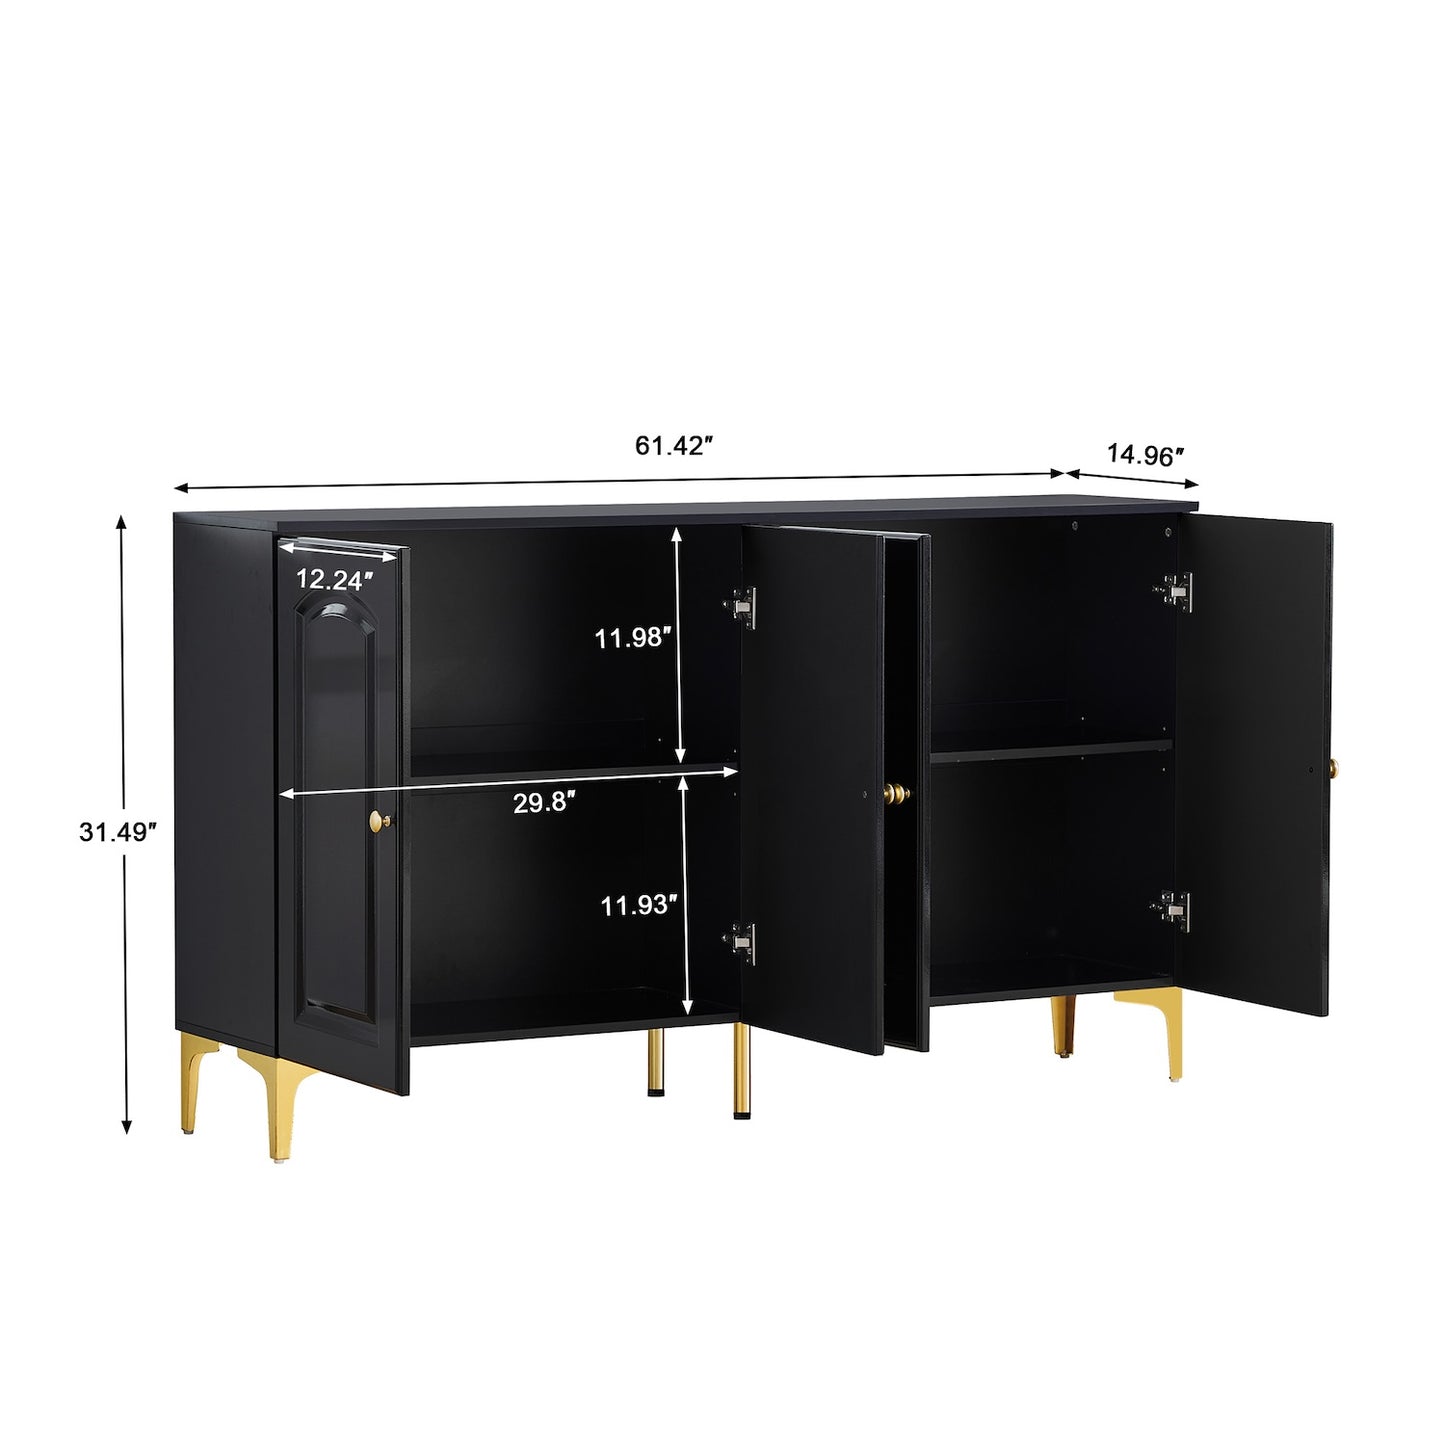 Afon 4-door Accent Cabinet with Gold Legs - Black